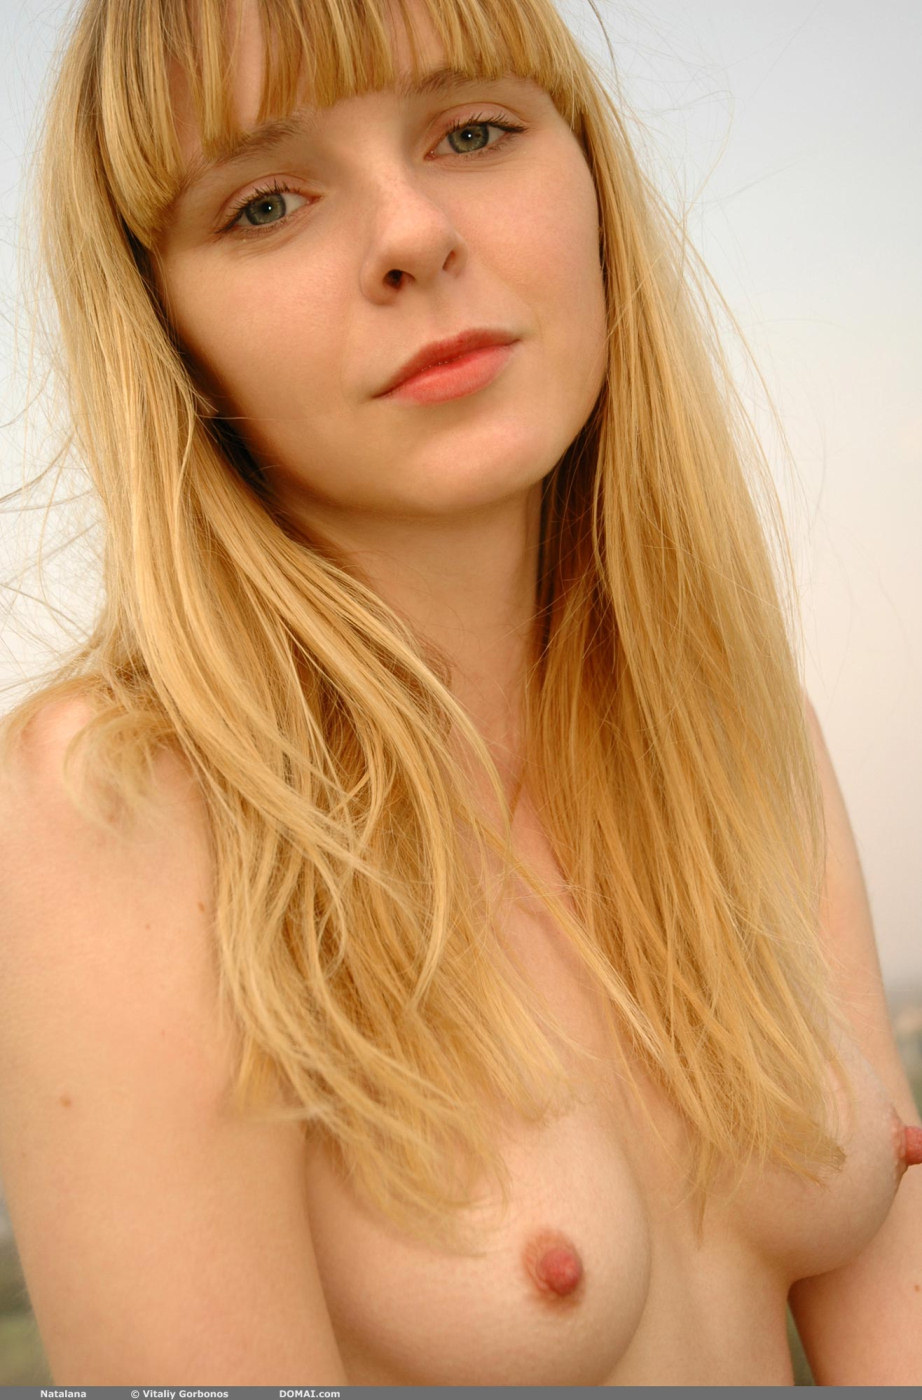 Puffy nipples blonde Natalana poses nude outdoor - 51-natalana-3-1104 from Domai